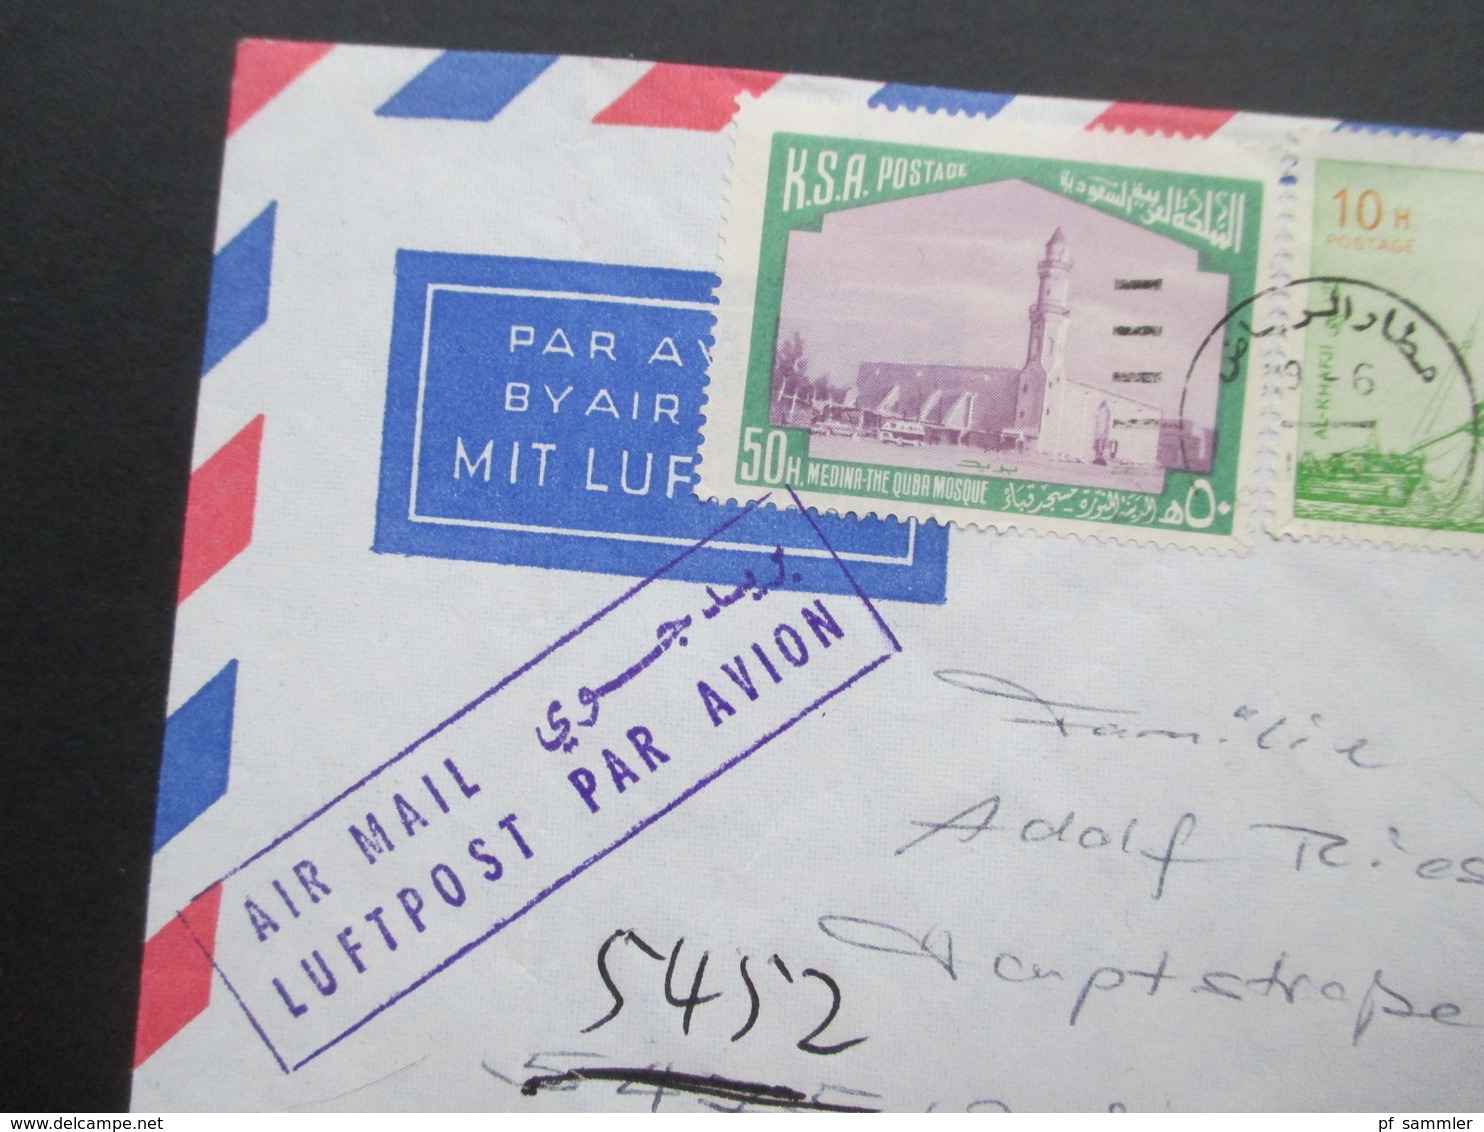 Saudi-Arabien 1977 KSA Postage MiF Air Mail / Luftpost Nach Weissenthurm 25th ANNIVERSARY OF THE RIAD - Saoedi-Arabië